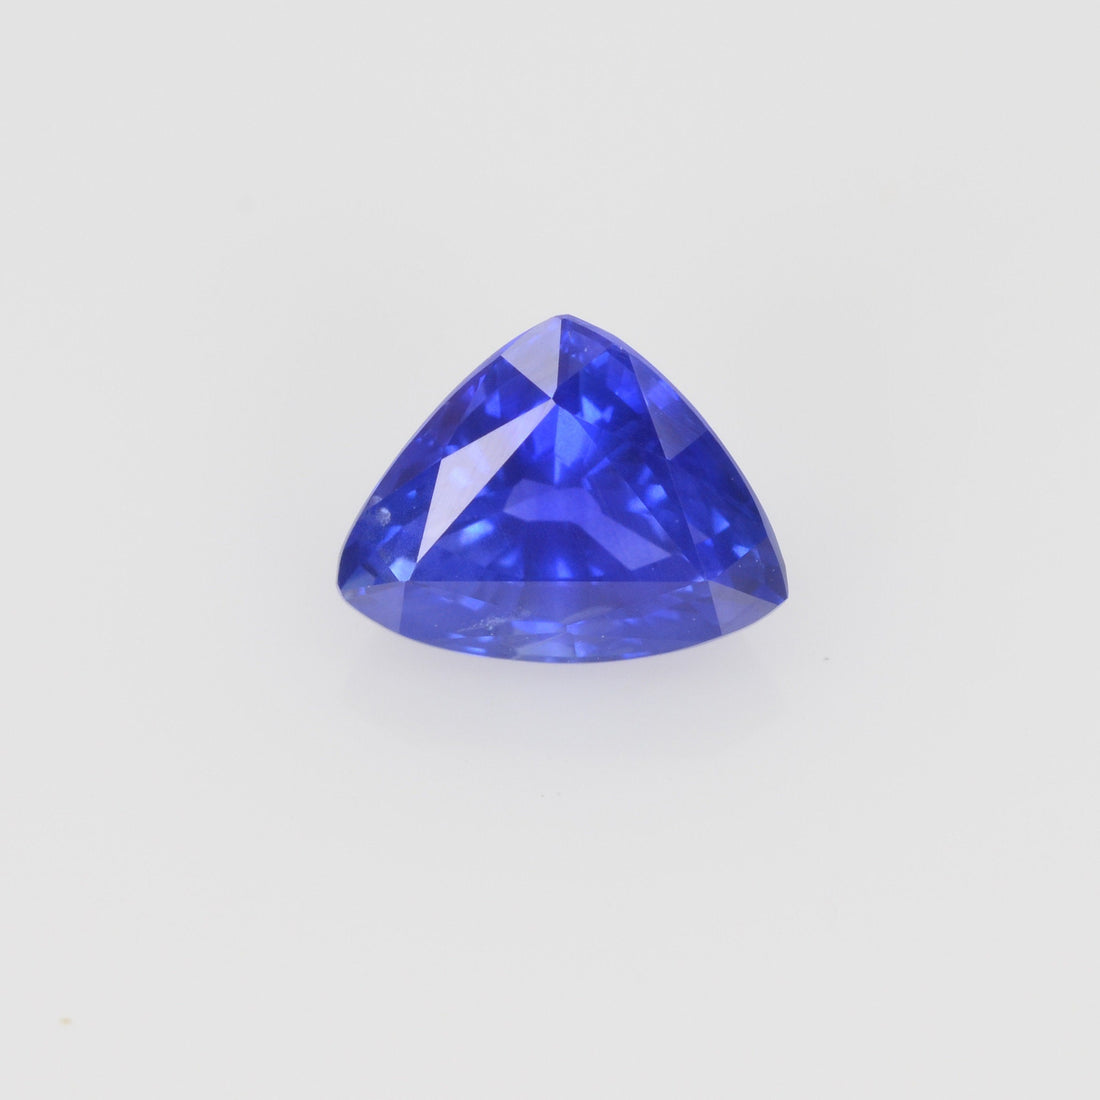 5.7-6.0 mm Natural Blue Sapphire Loose Gemstone Trillion Cut